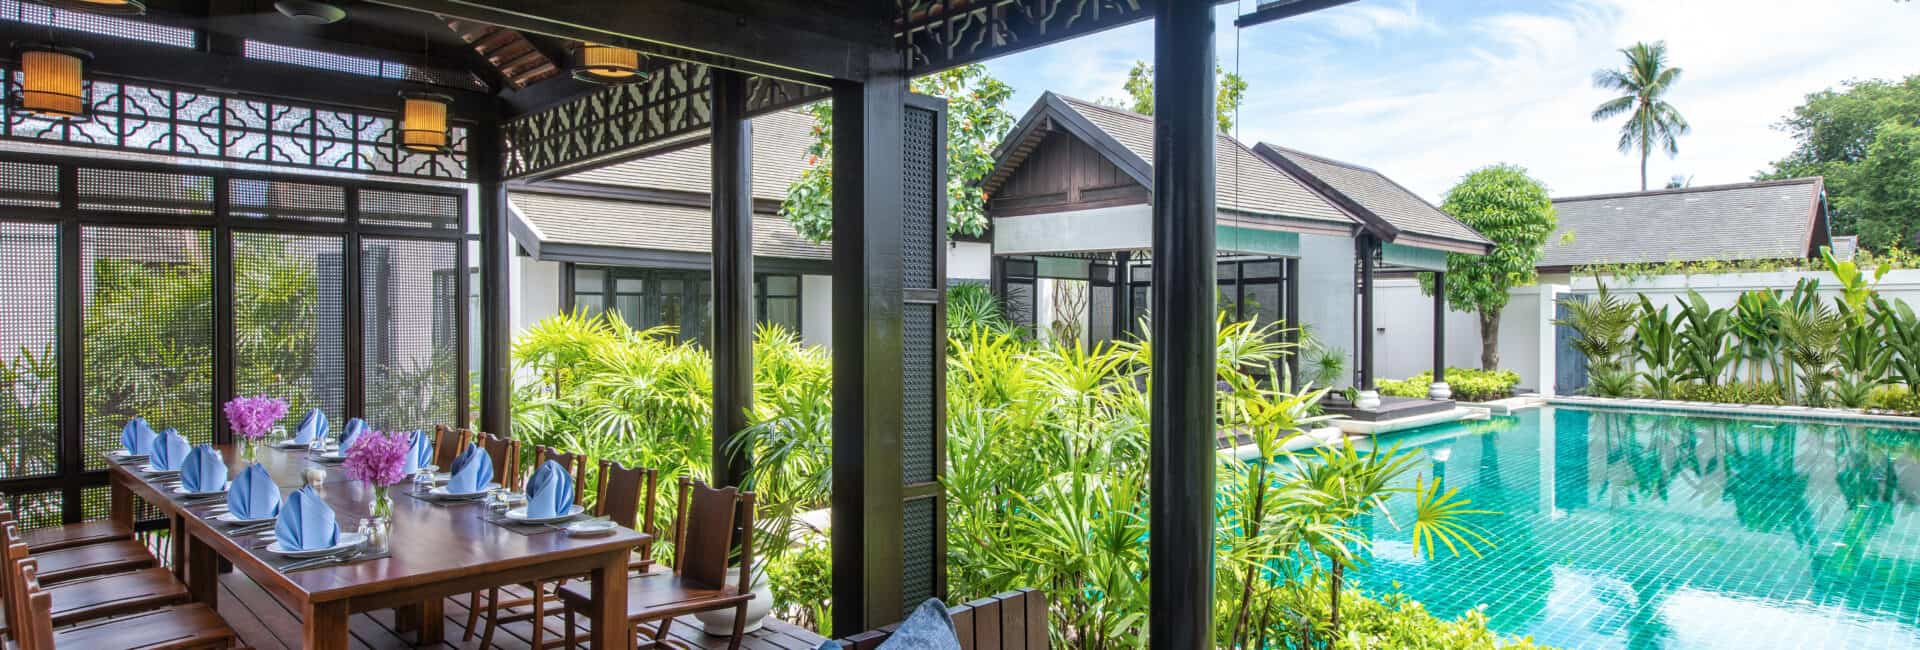 Anantara Lawana Koh Samui Resort - Five Bedroom Lawana Residence